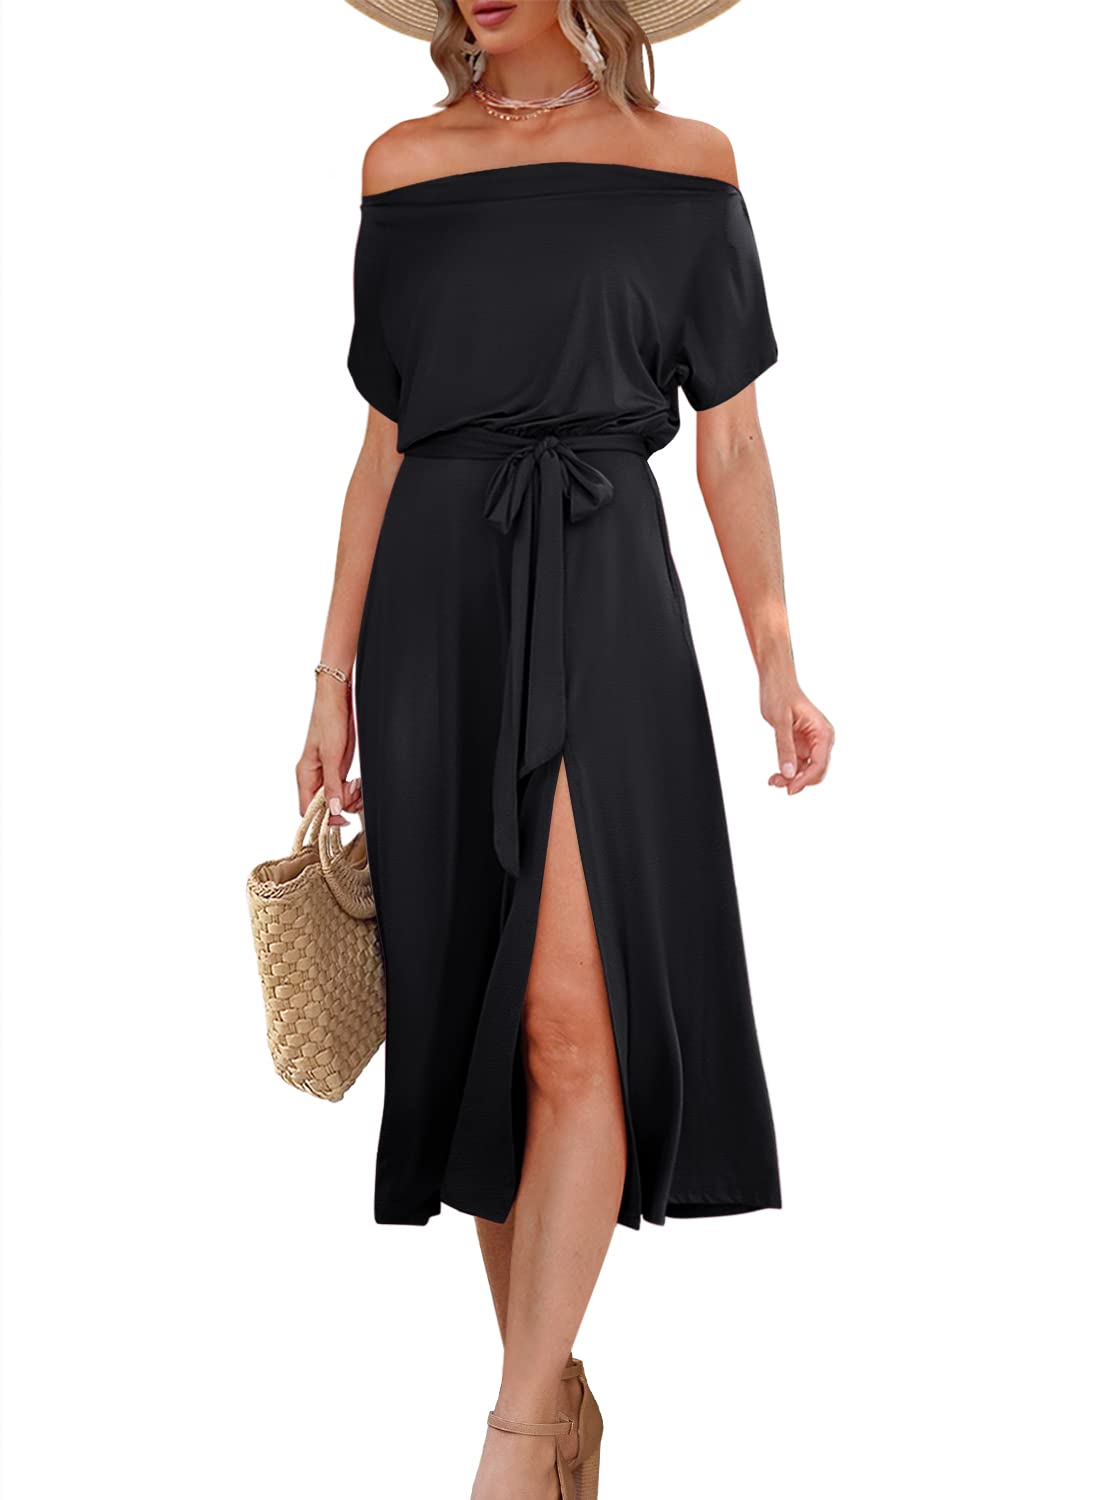 MIHOLL Women's Summer Dress Off Shoulder Short Sleeve Tie Waist Split Midi Dress